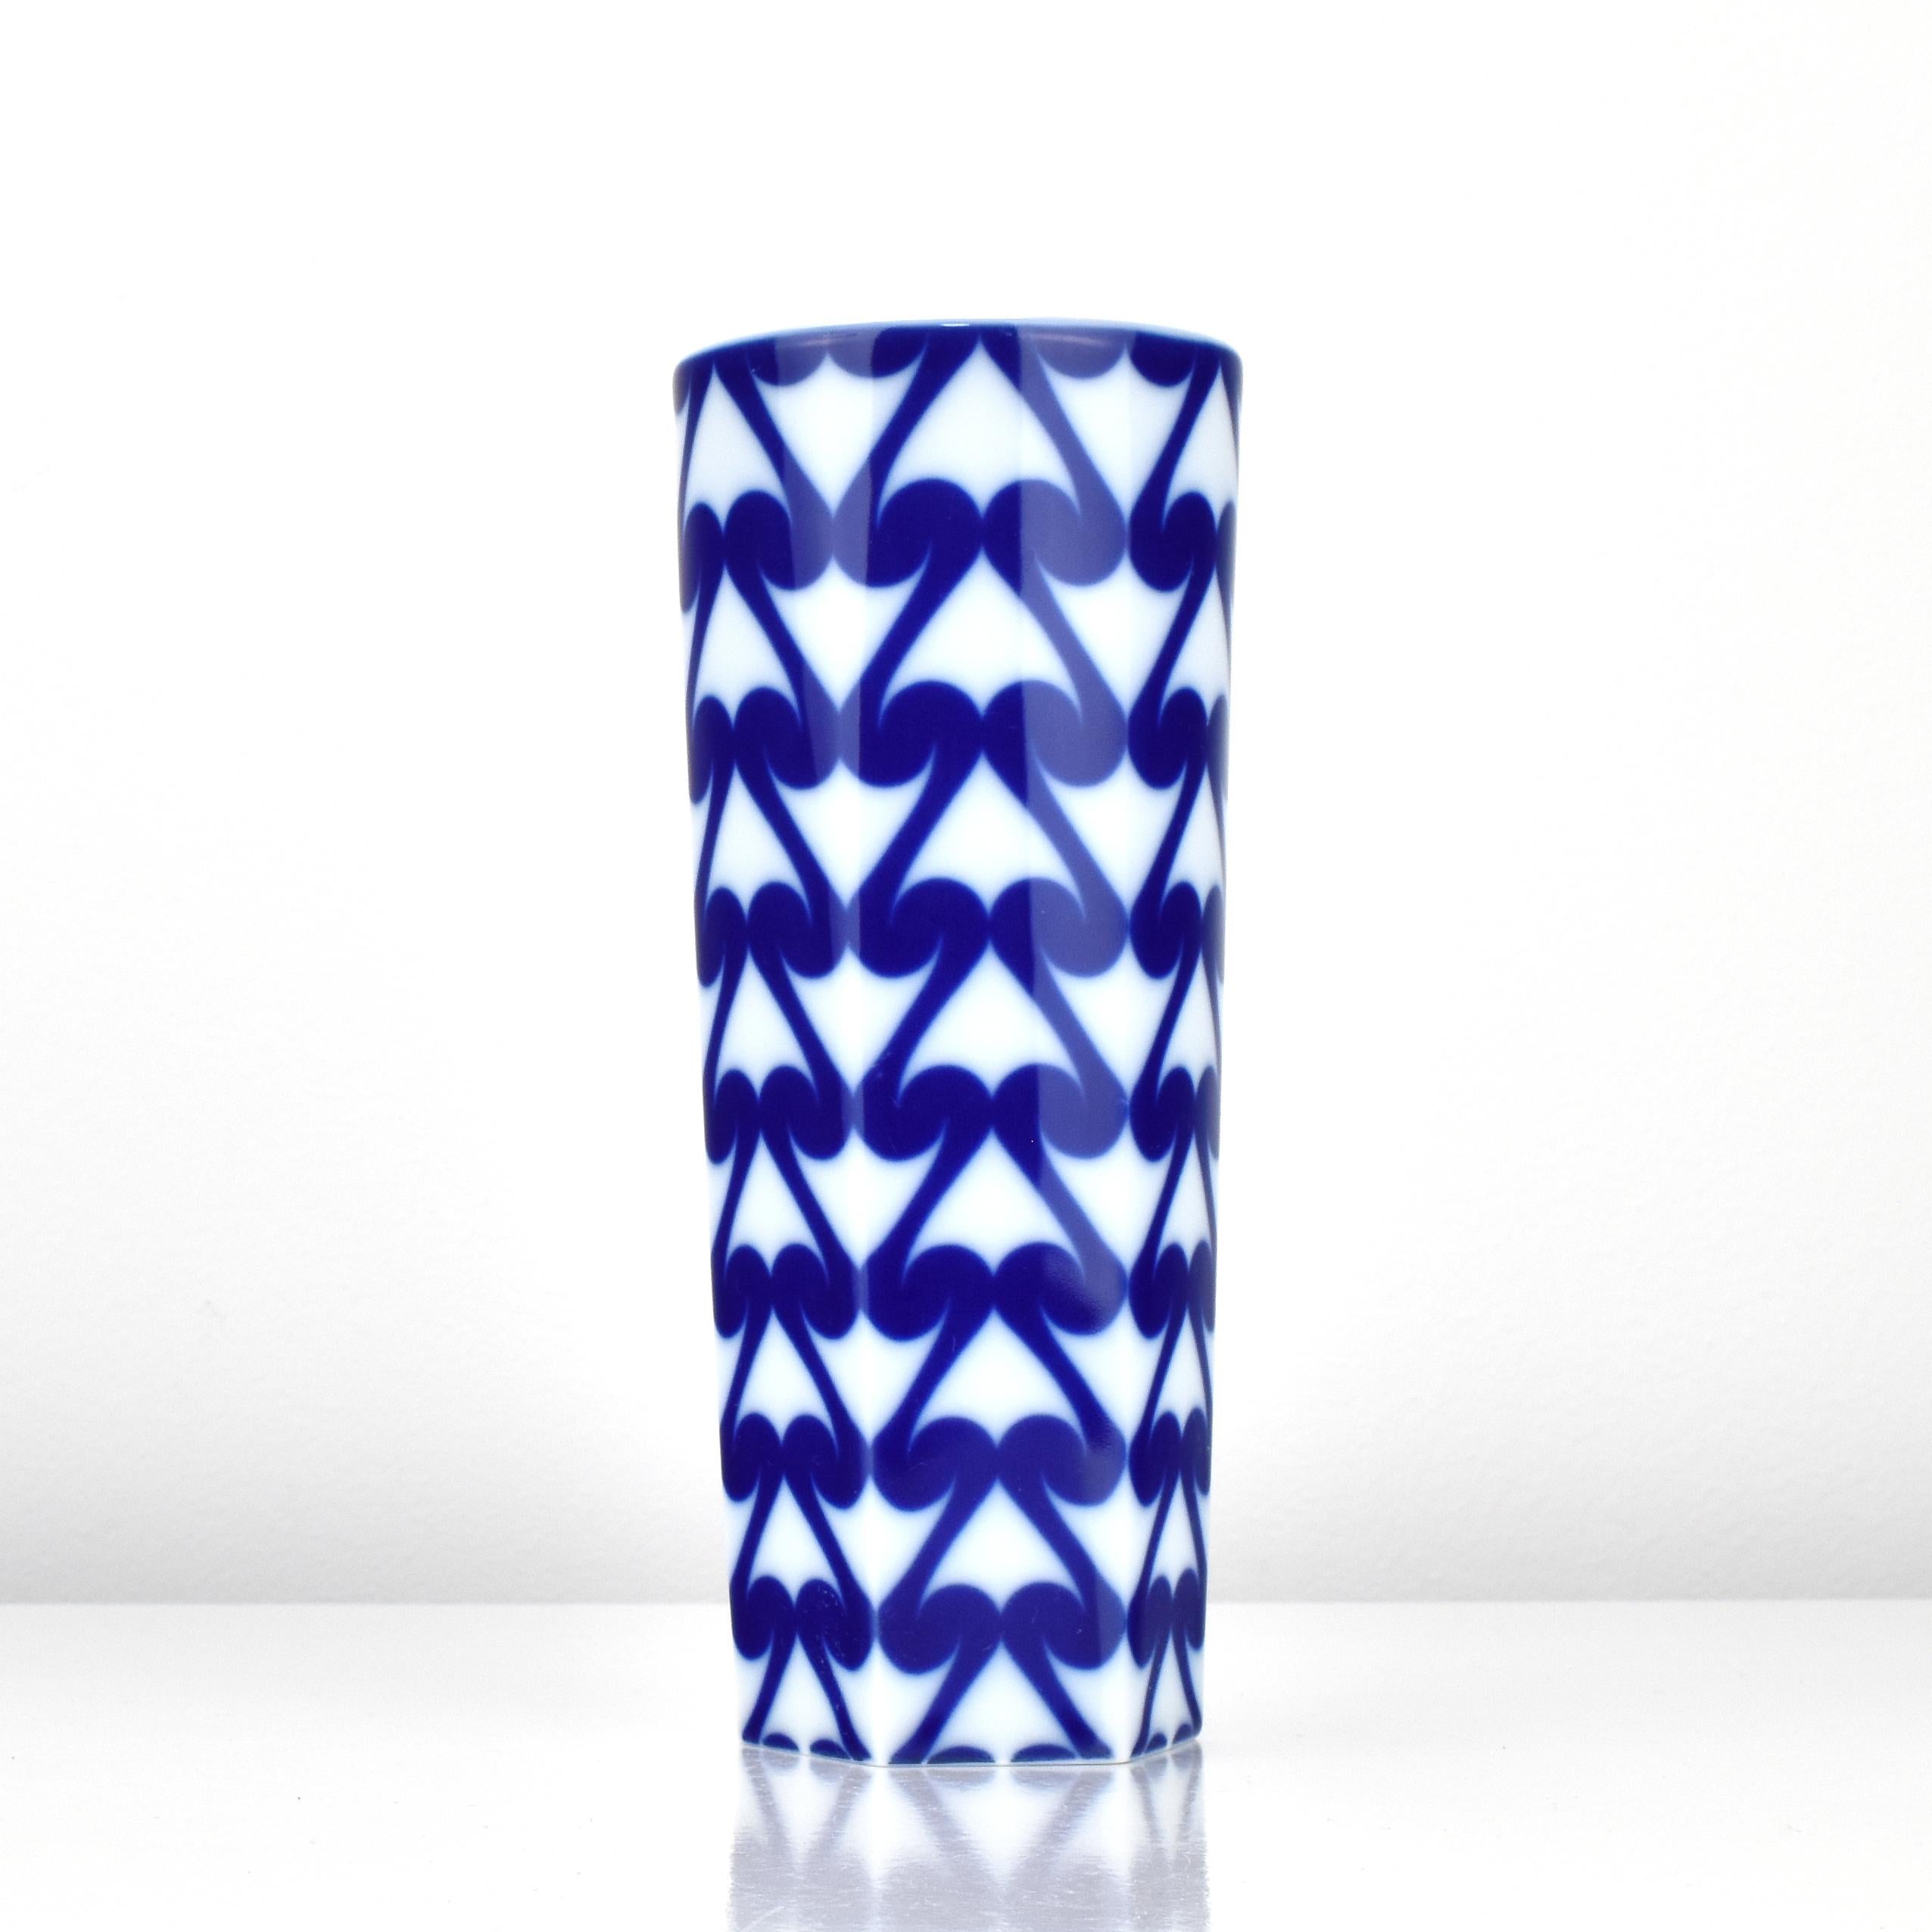 Mid-Century Modern Modernist Blue & White Porcelain Vase by Rosenthal Studio Line Germany For Sale